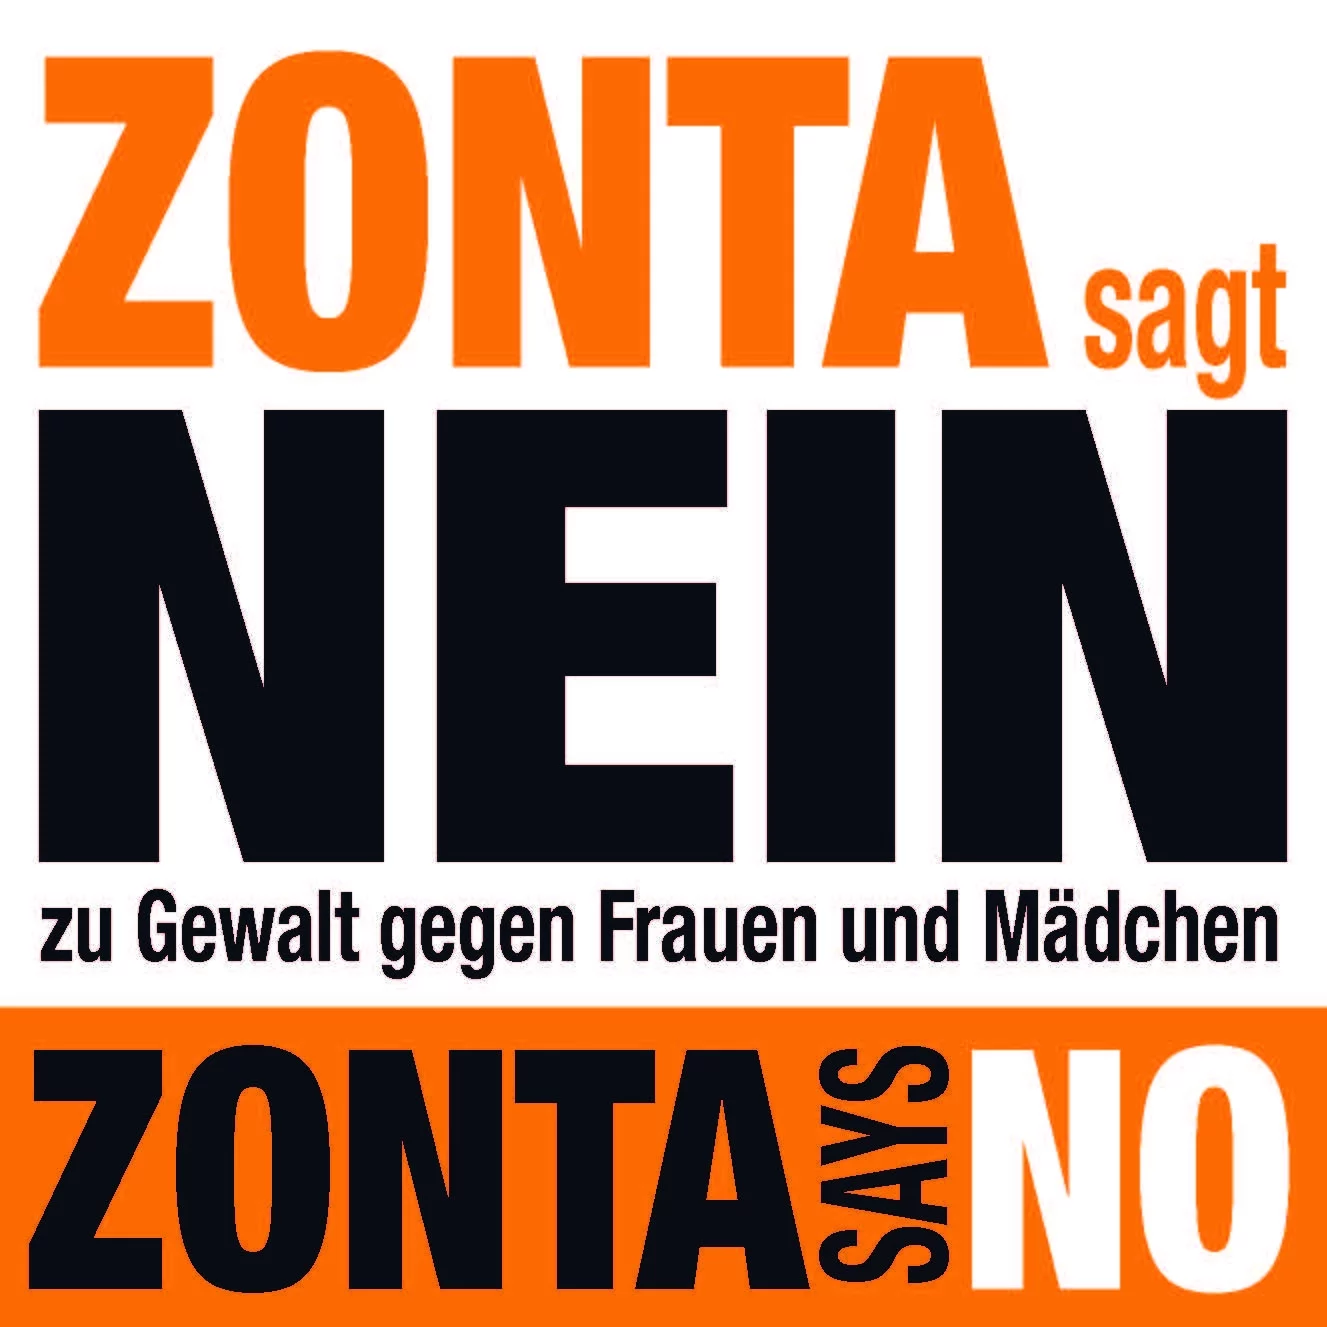 Zonta sagt nein Logo